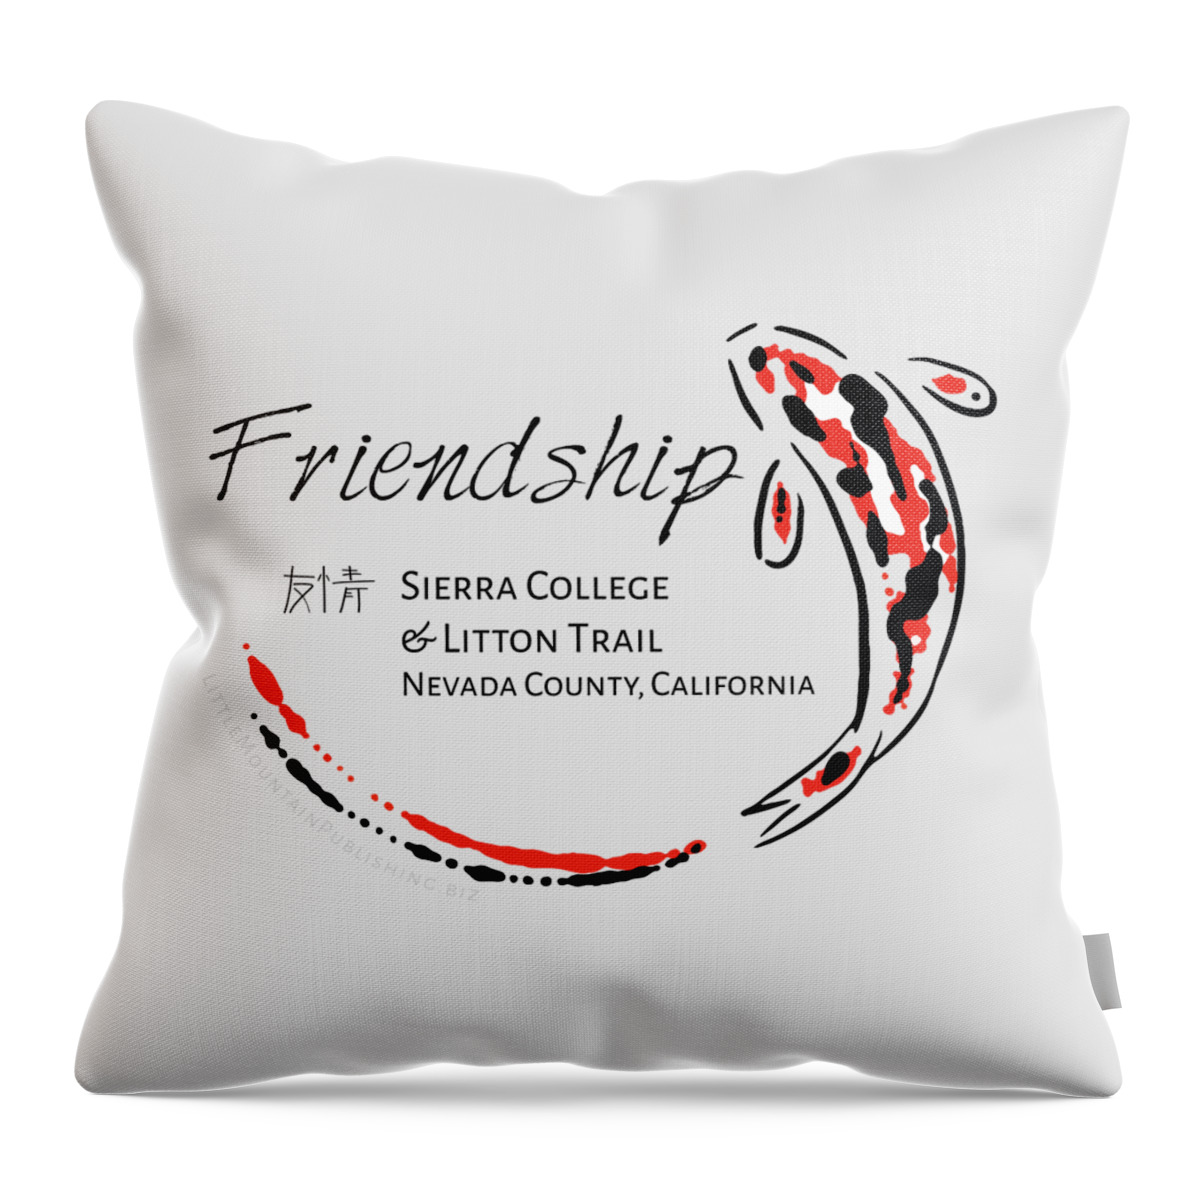 Koi Throw Pillow featuring the digital art Friendship Koi by Lisa Redfern